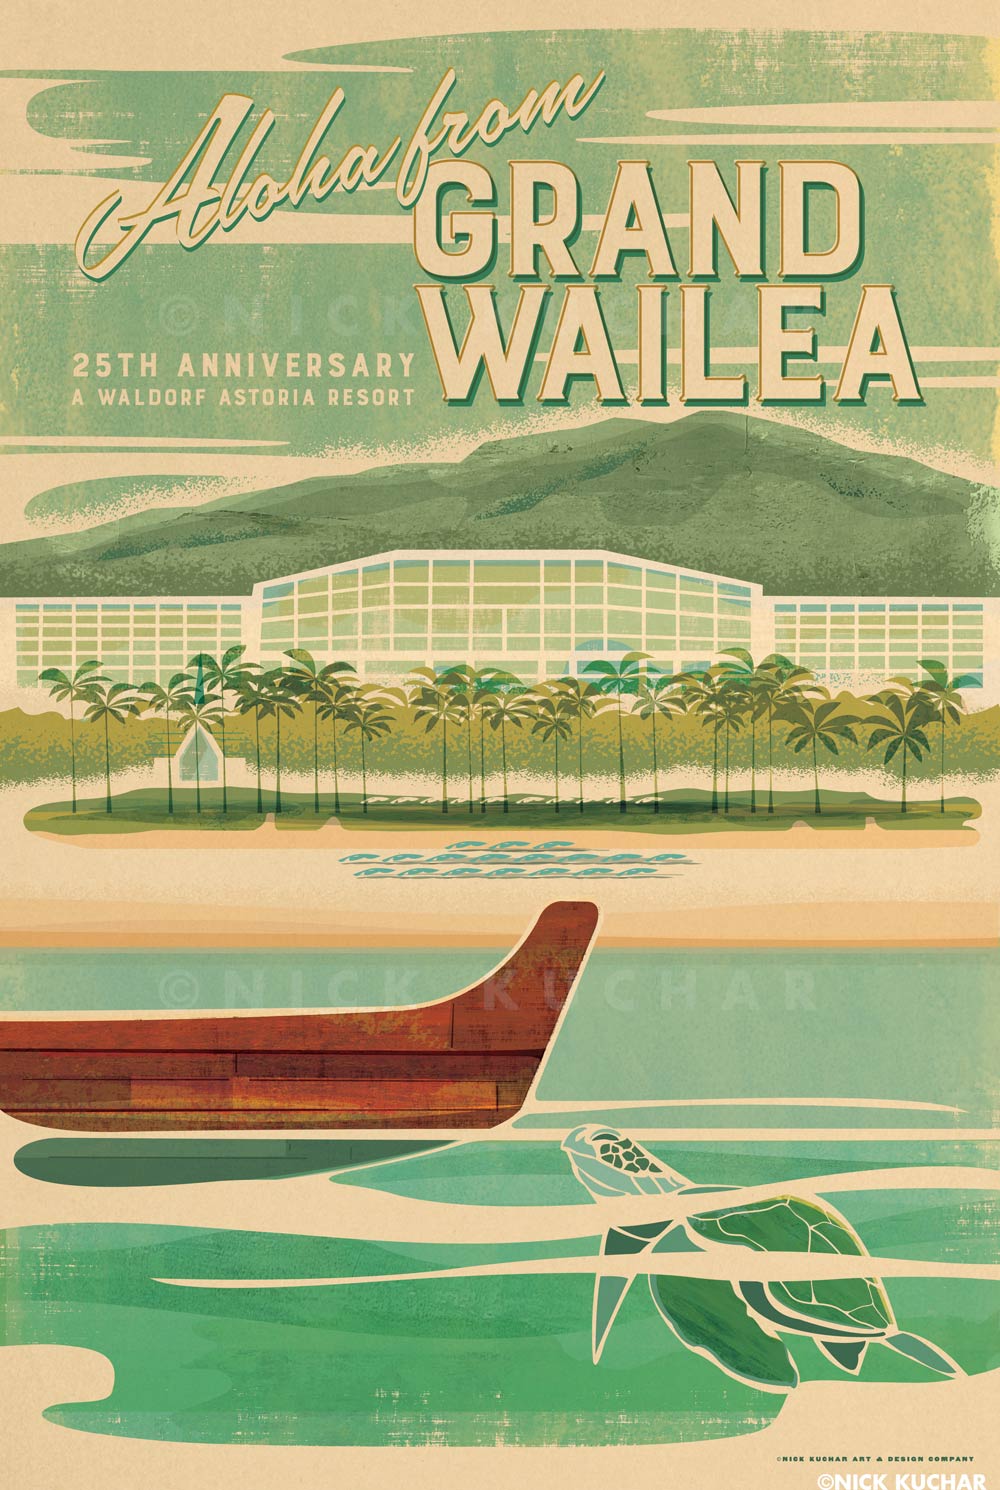 nick-kuchar-vintage-grand-wailea-travel-poster